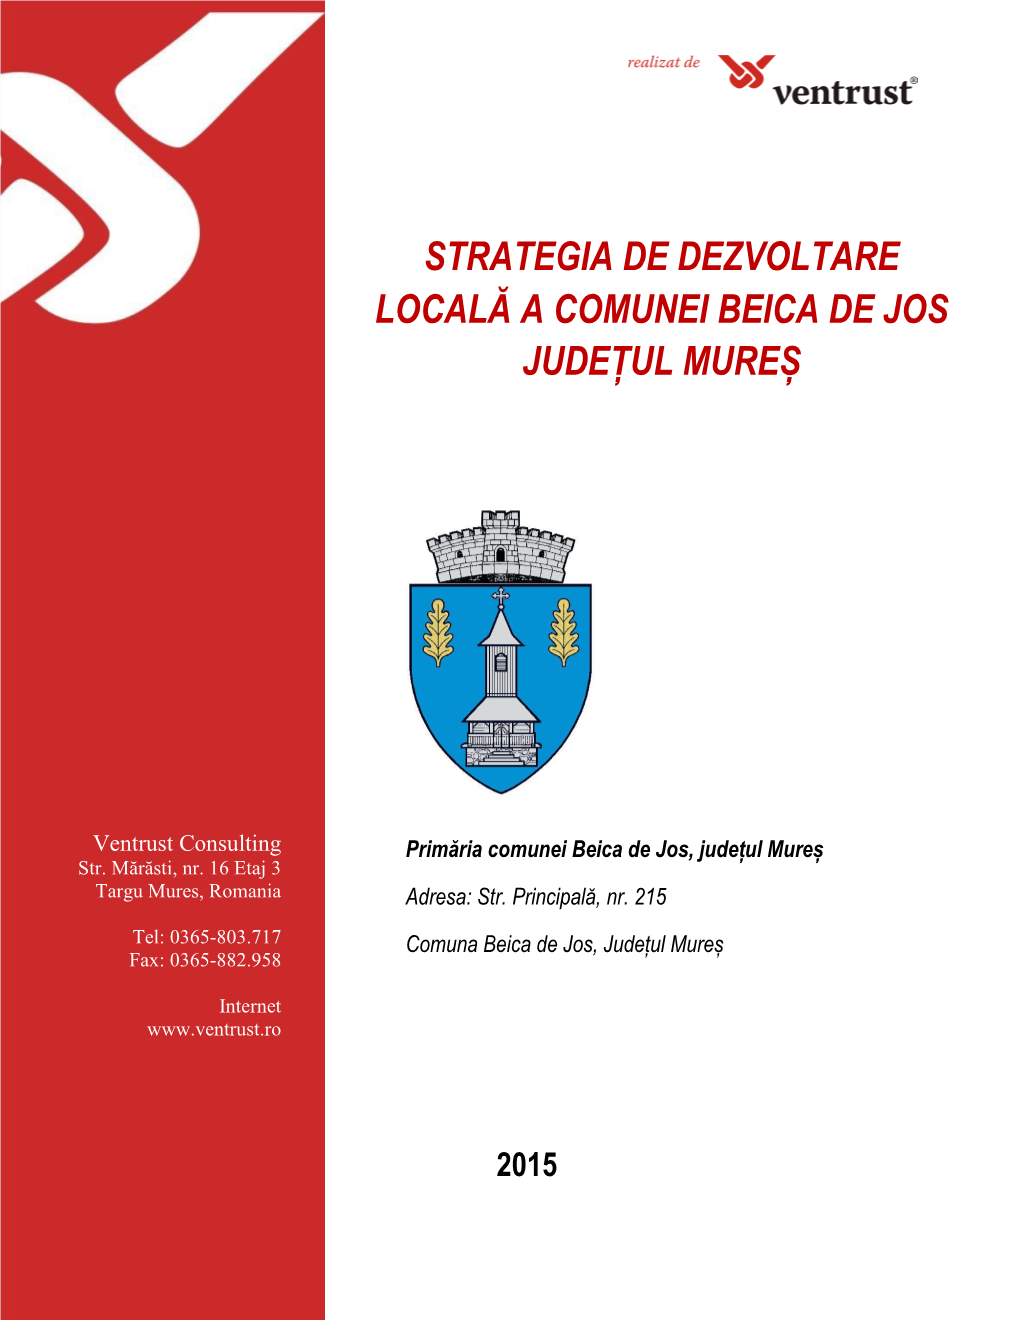 Strategia De Dezvoltare Locala a Comunei Faragau, Judetul Mures